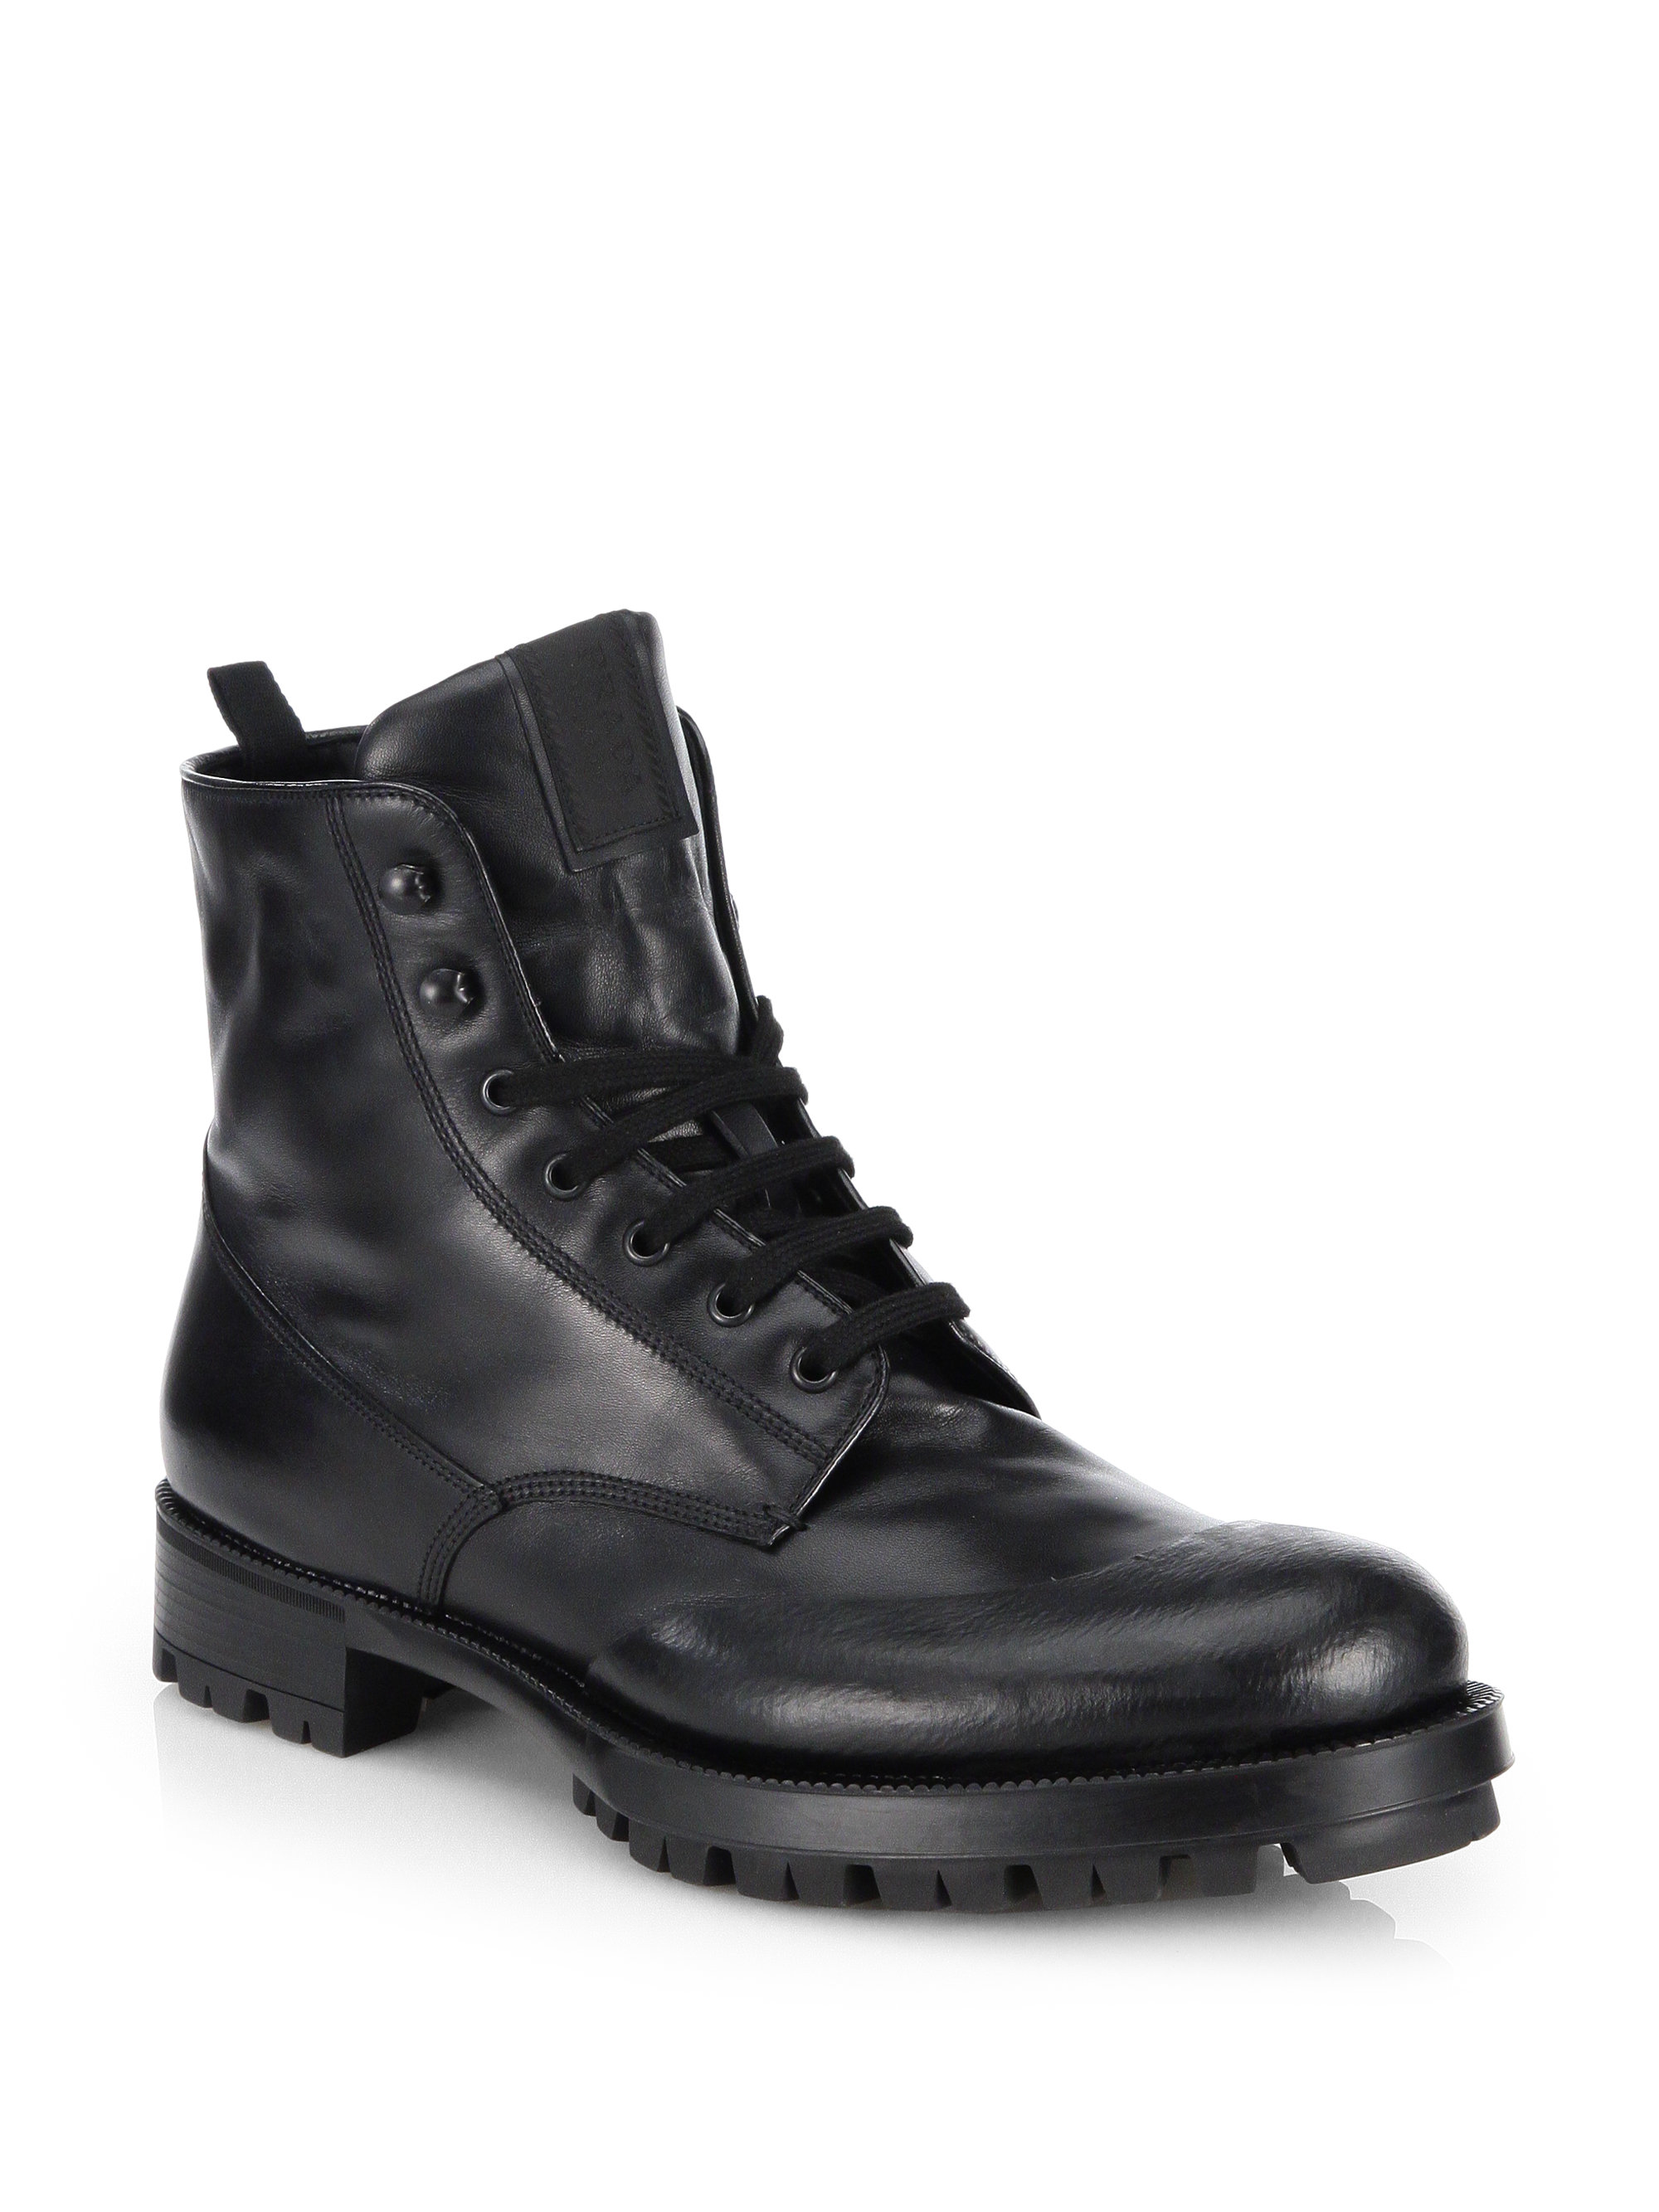 black leather combat boots mens